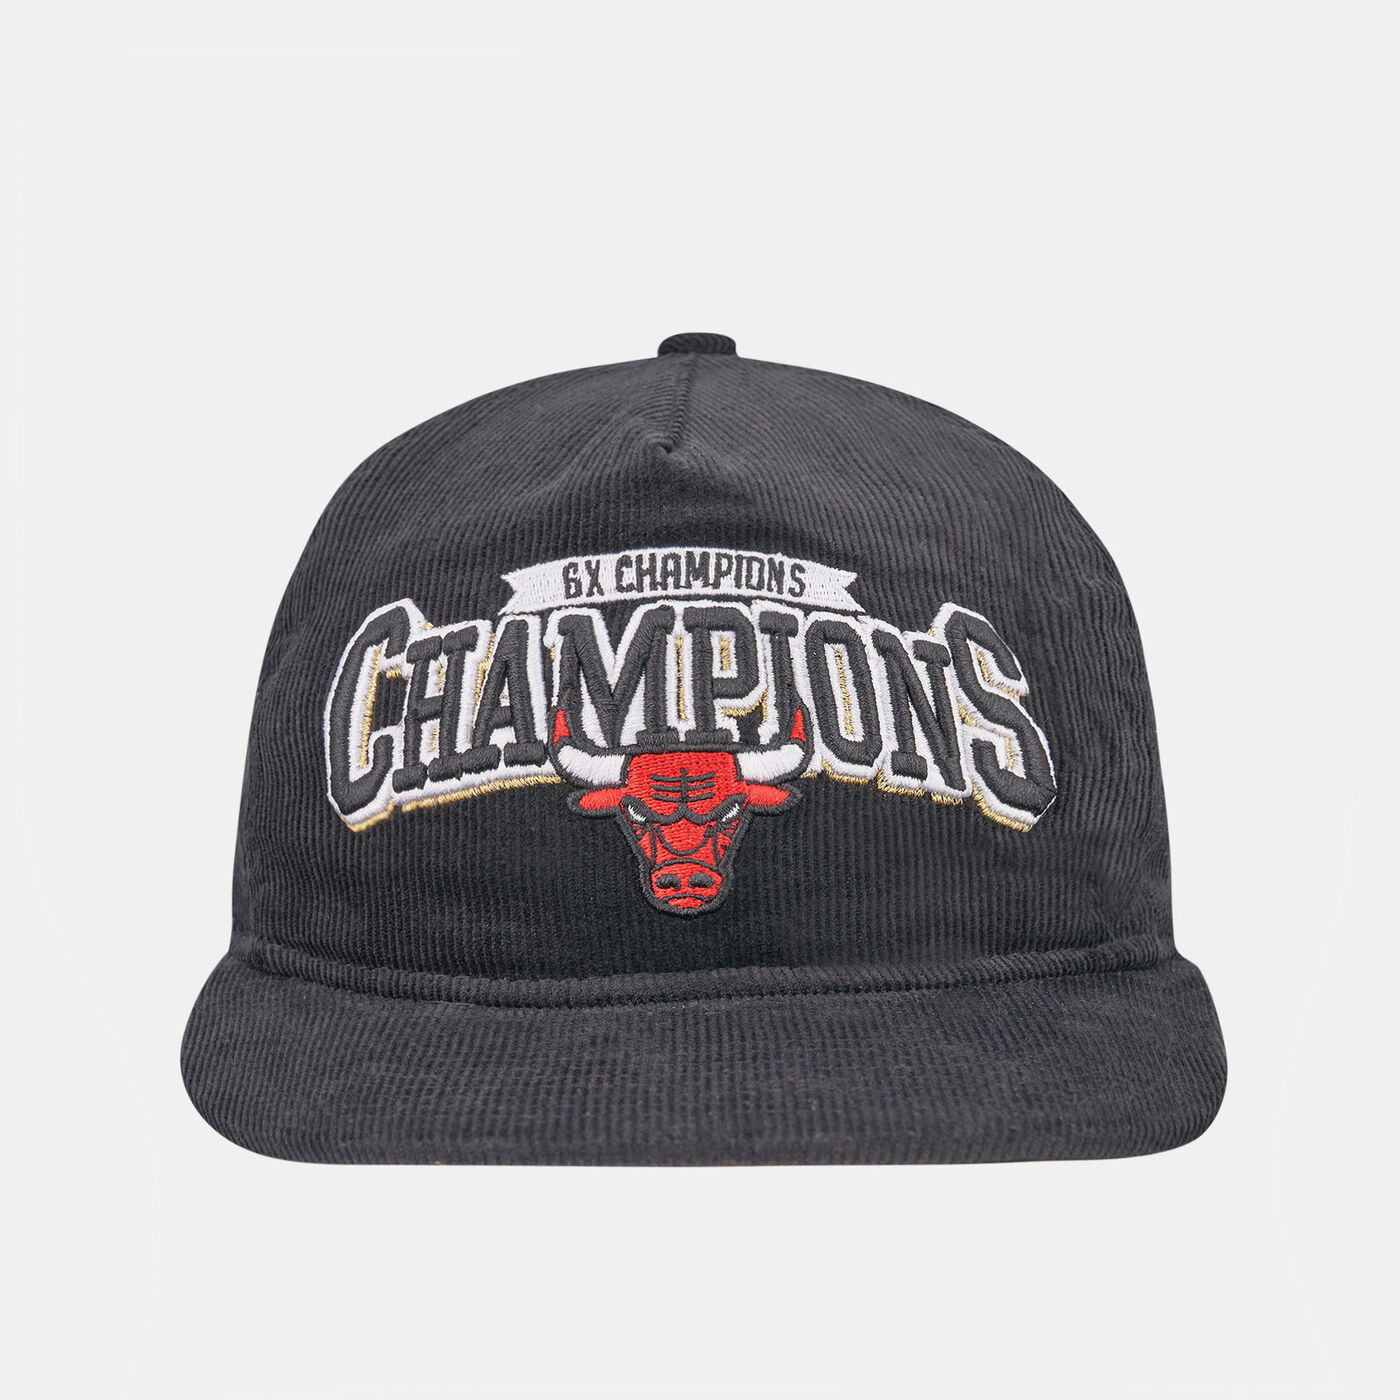 Men's Chicago Bulls League 6x Champions Golfer Snapback Cap